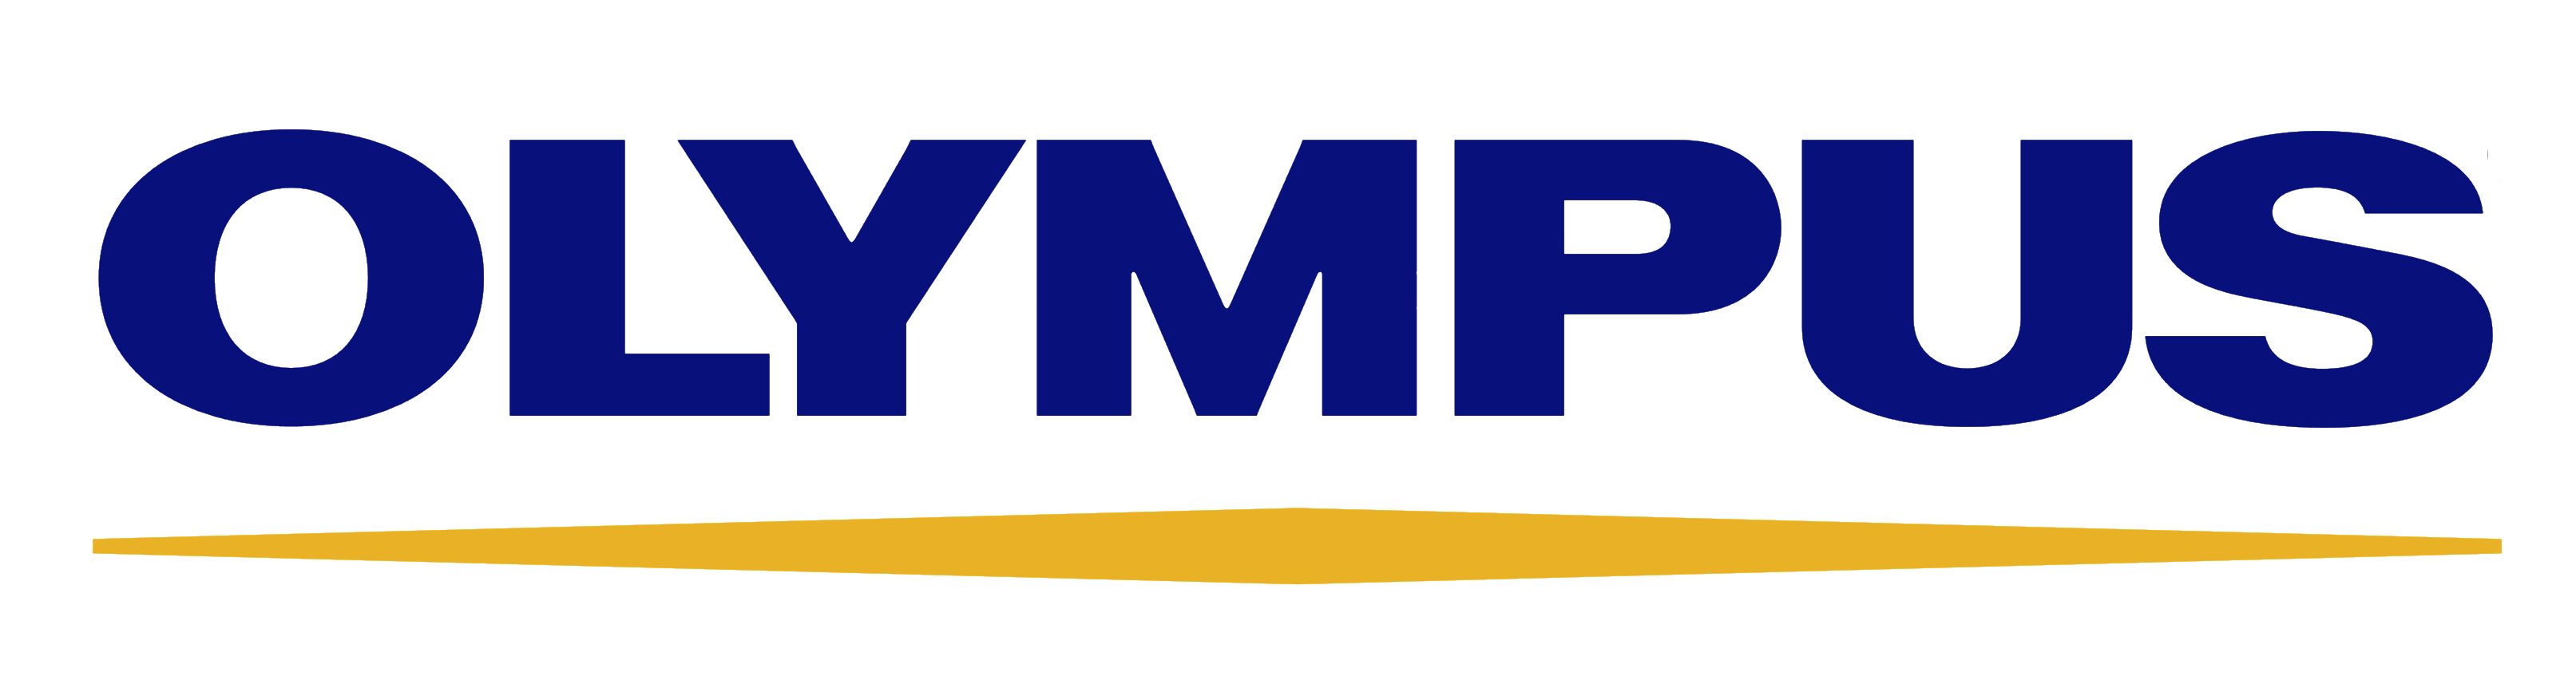 Olympus logo, logotype